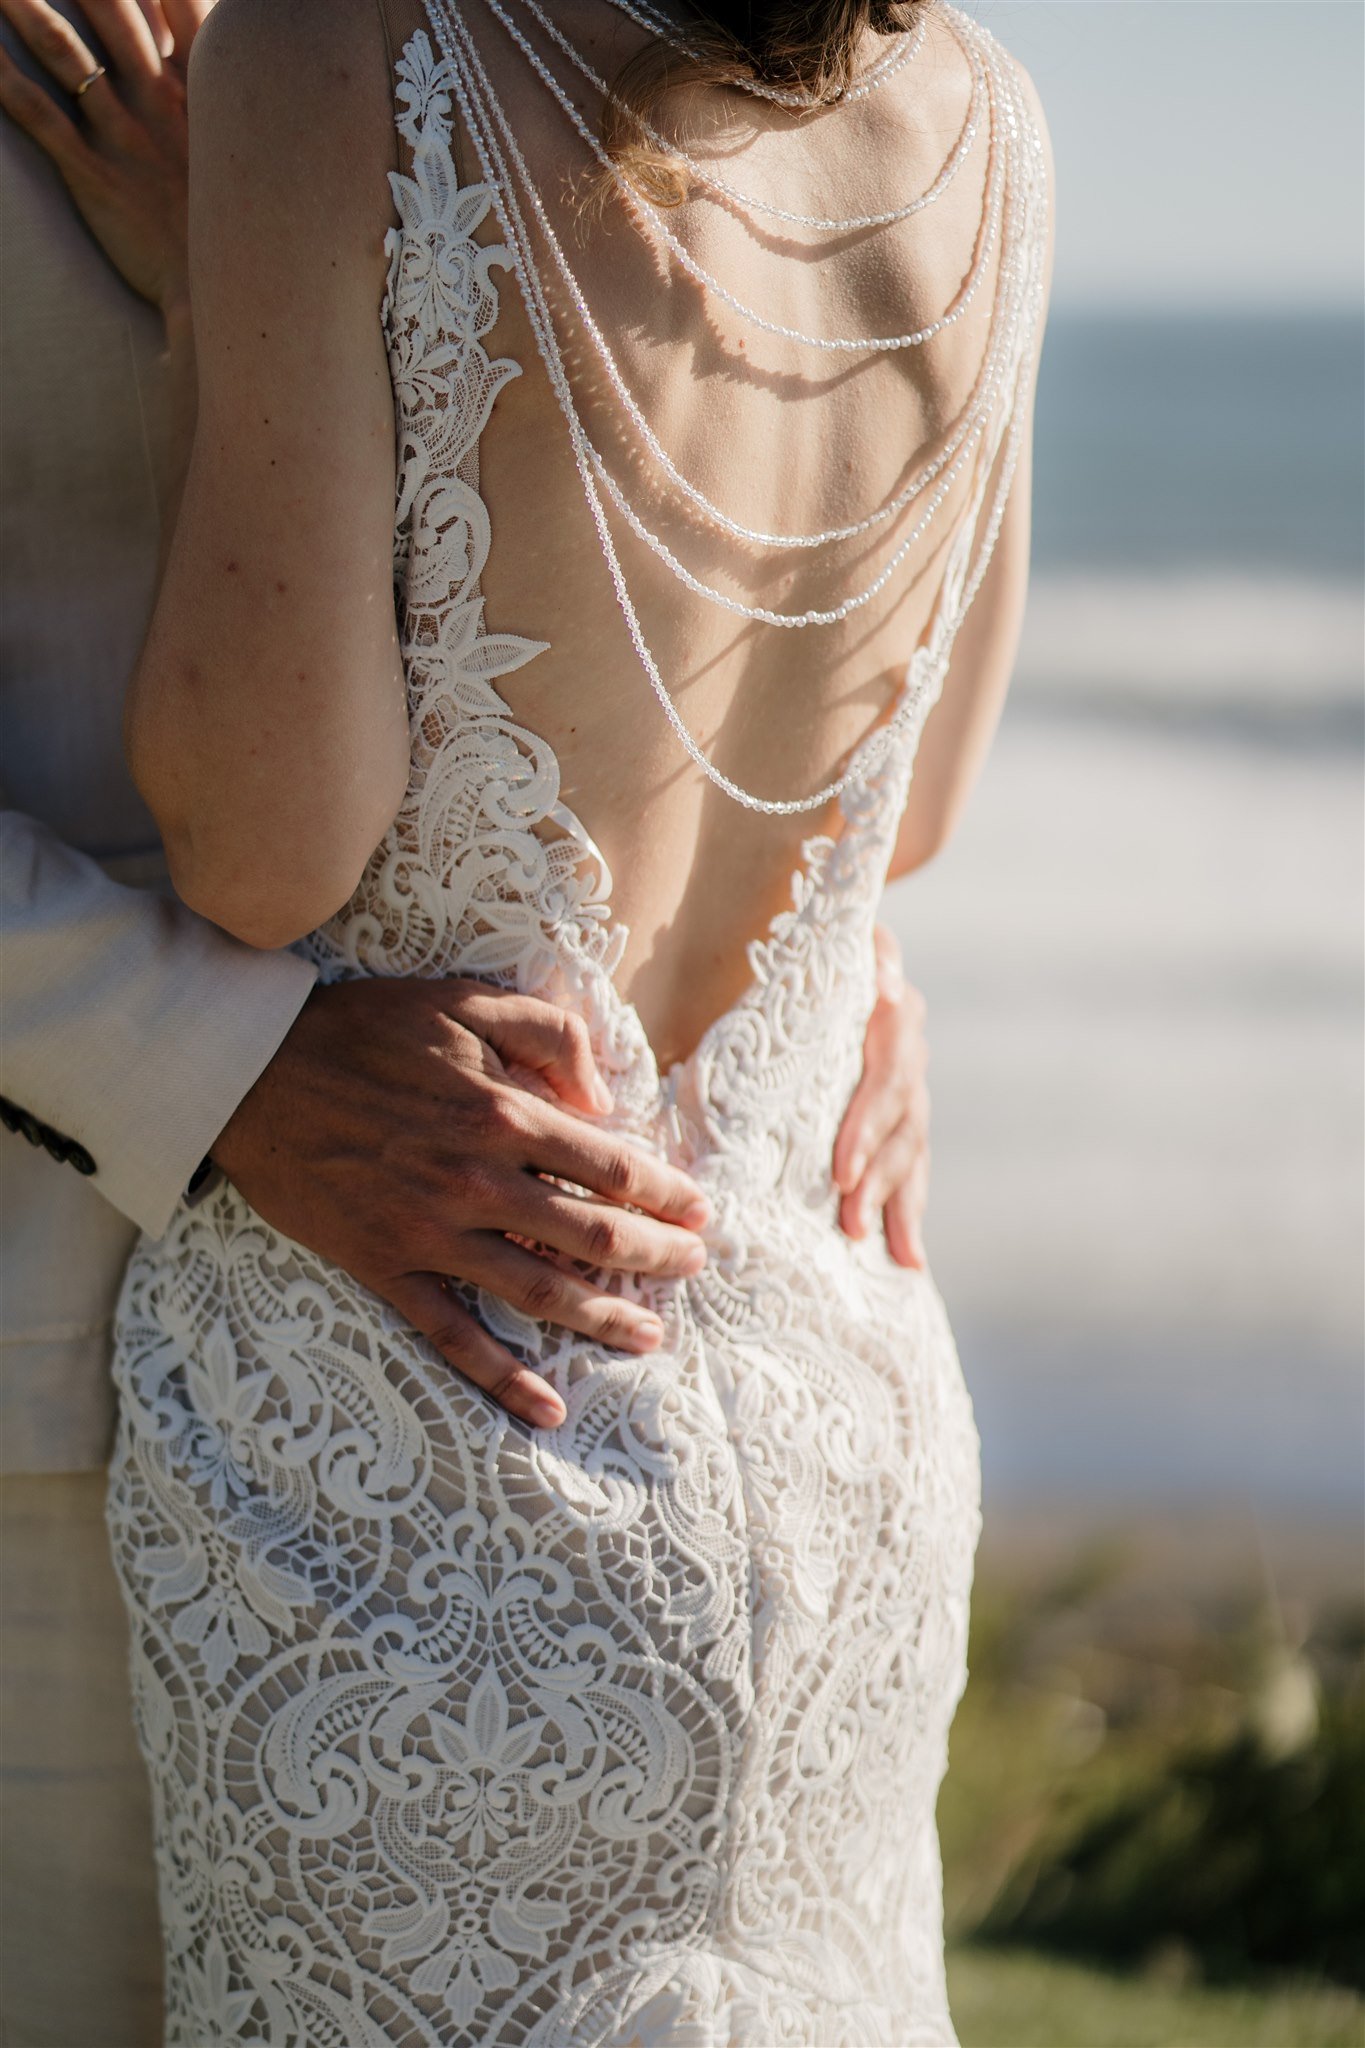 castaways-NZ-new-zealand-auckland-wedding-photographer-photography-videography-film-dear-white-productions-best-venue-waiuku-engagement-elopement-style-beach-intimate (247).jpg